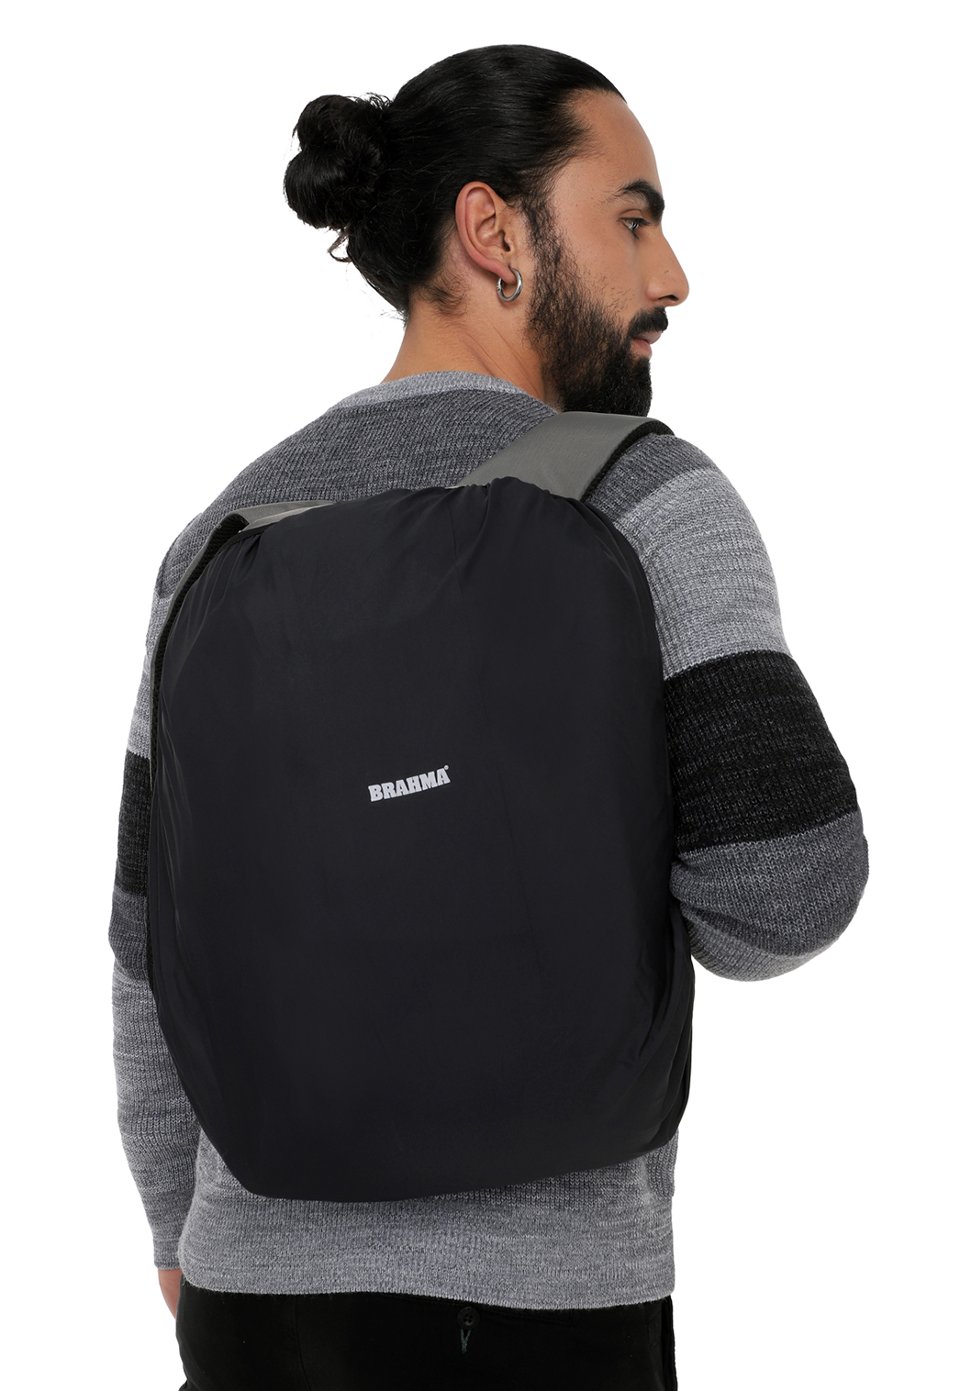 POR0057 - Backpacks